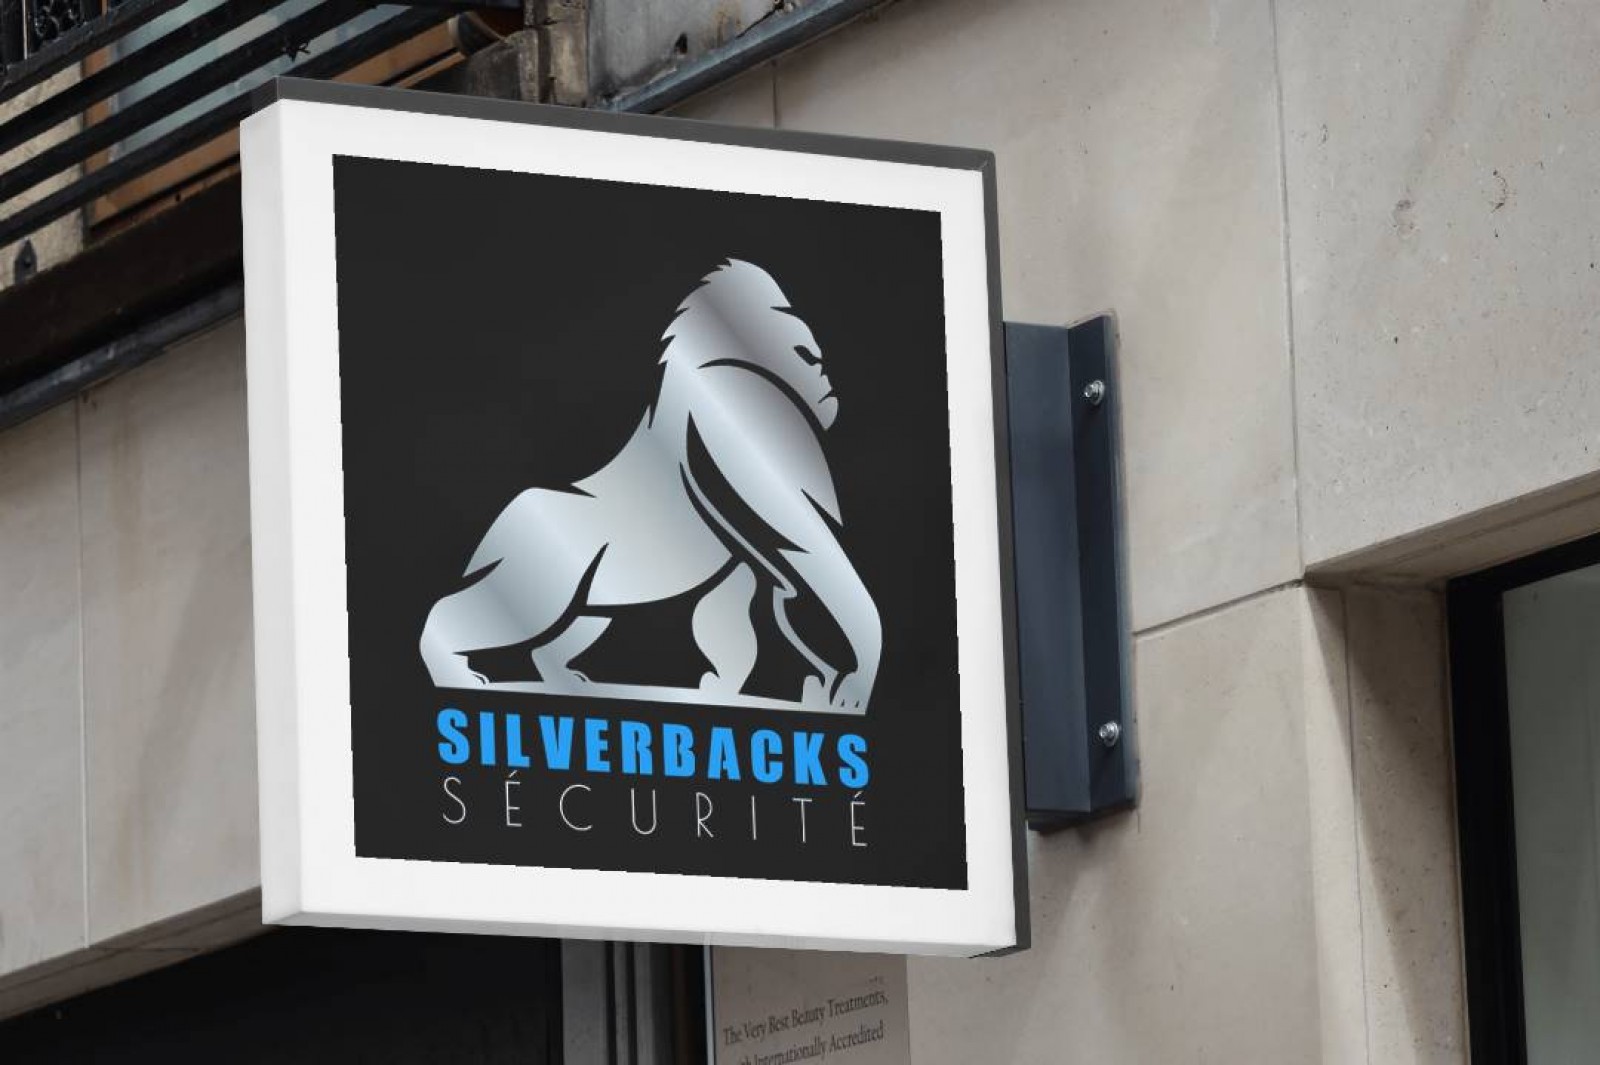 SilverBacks Sécurité